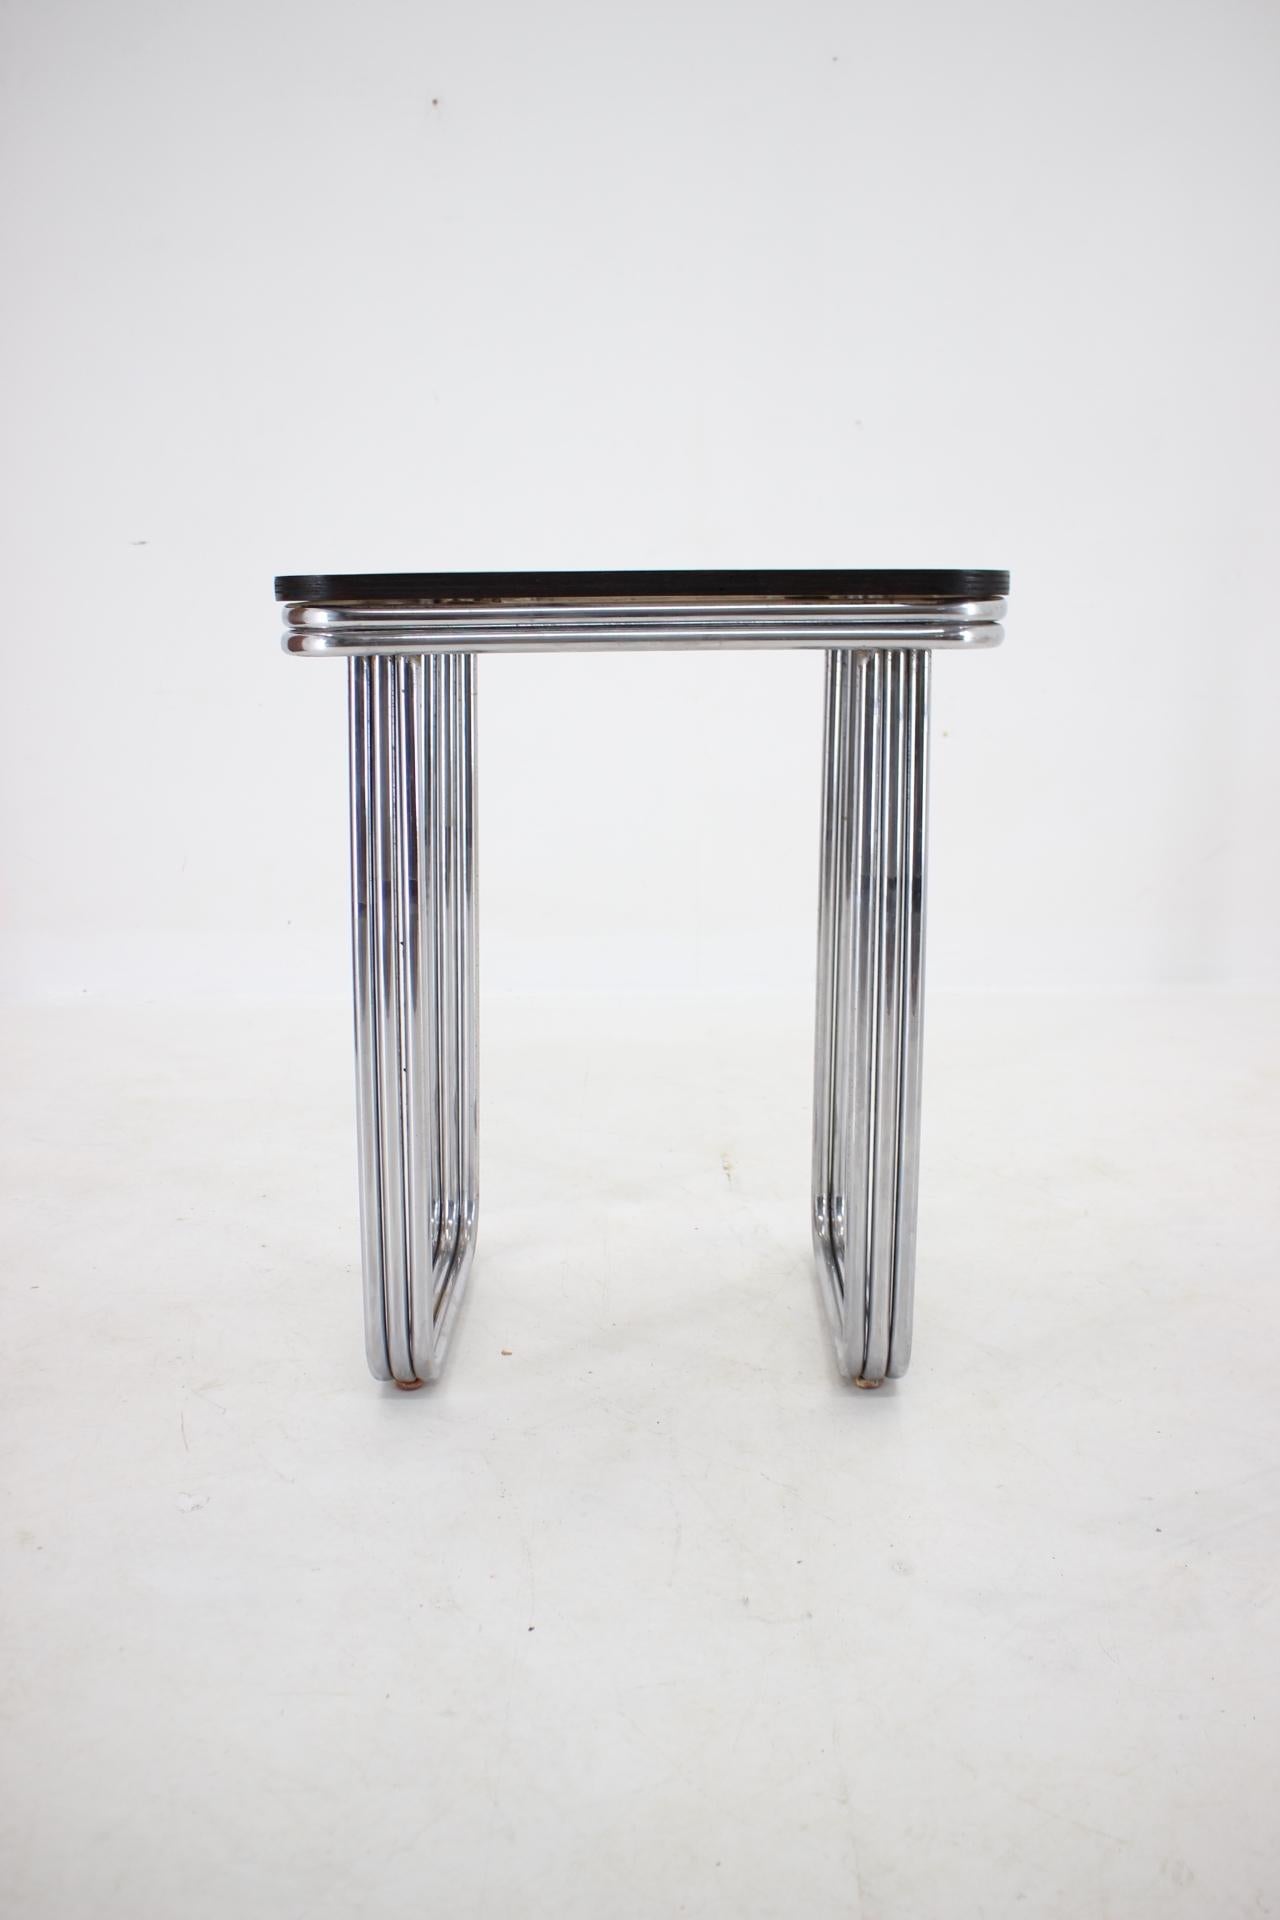 Bauhaus Art Deco Tubular Steel Chrom Table, 1930s For Sale 2